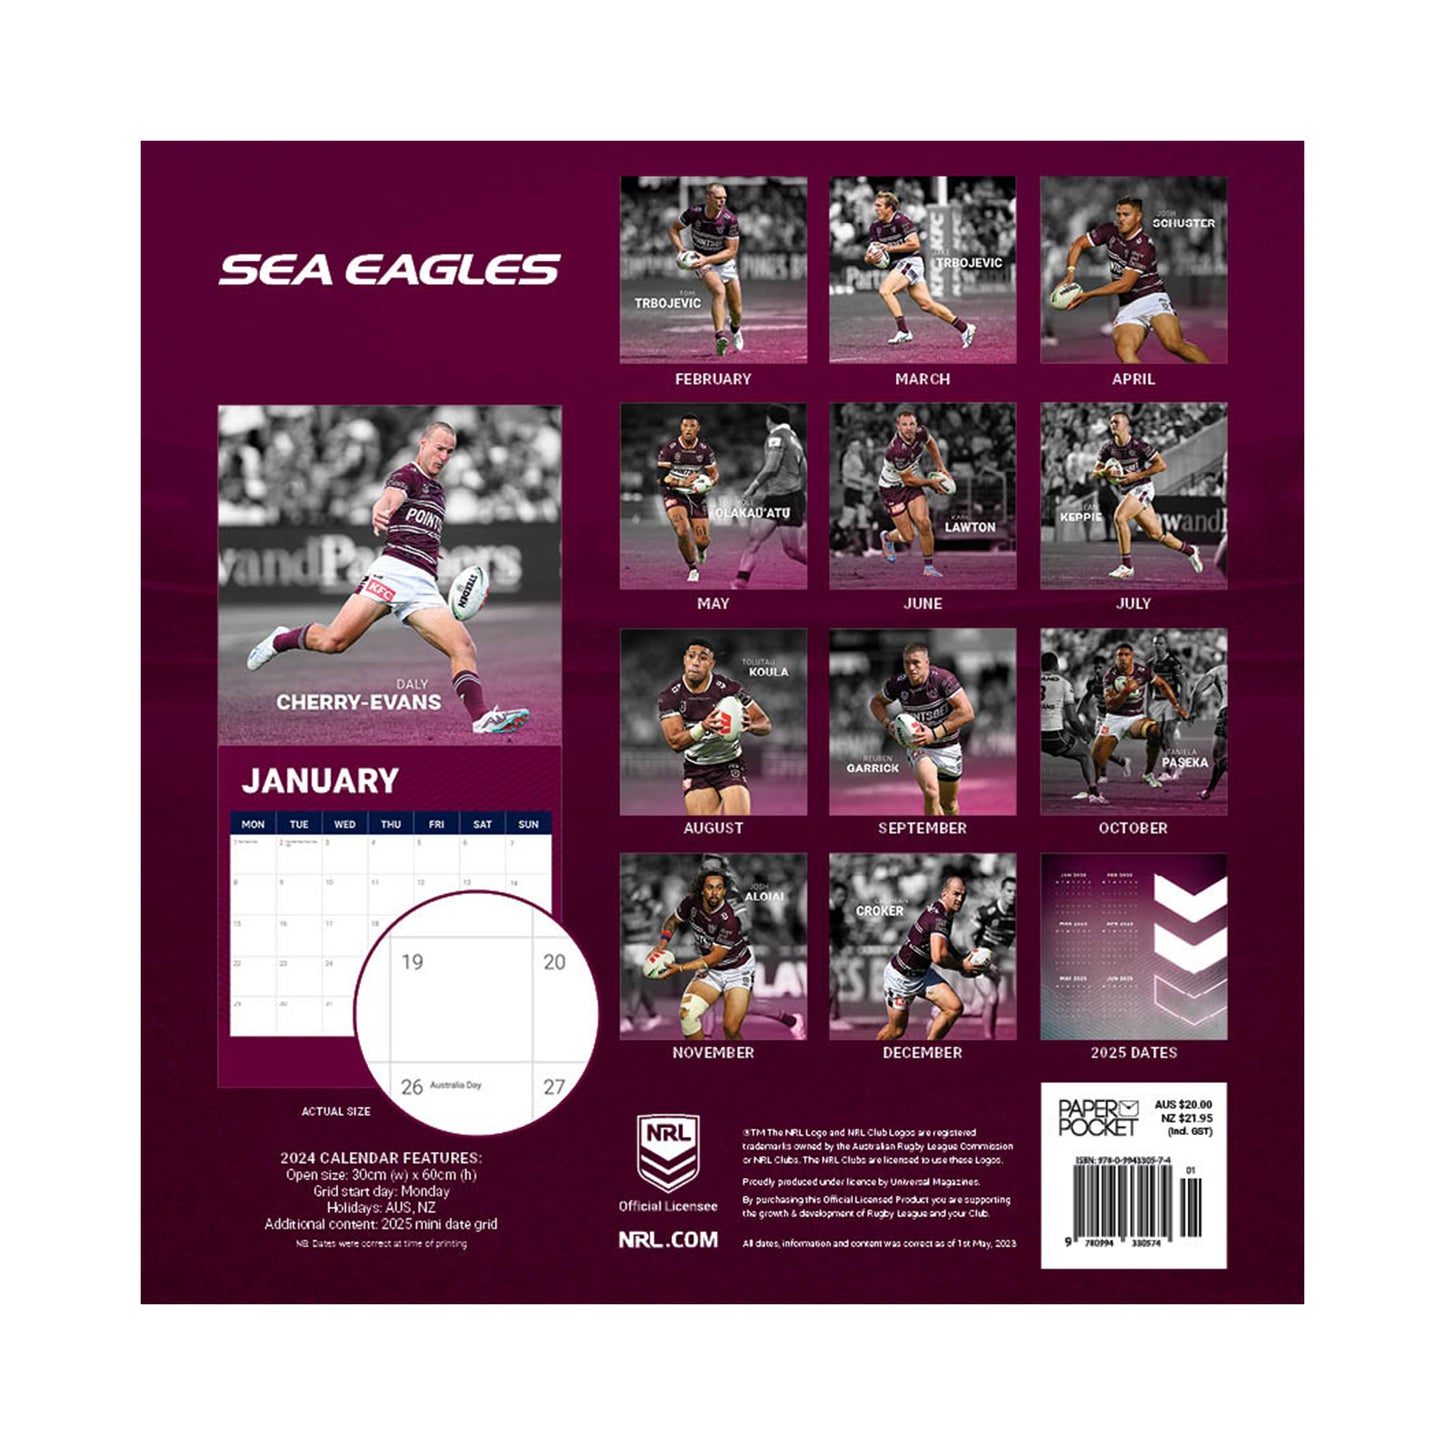 Manly-Warringah Sea Eagles 2024 Calendar